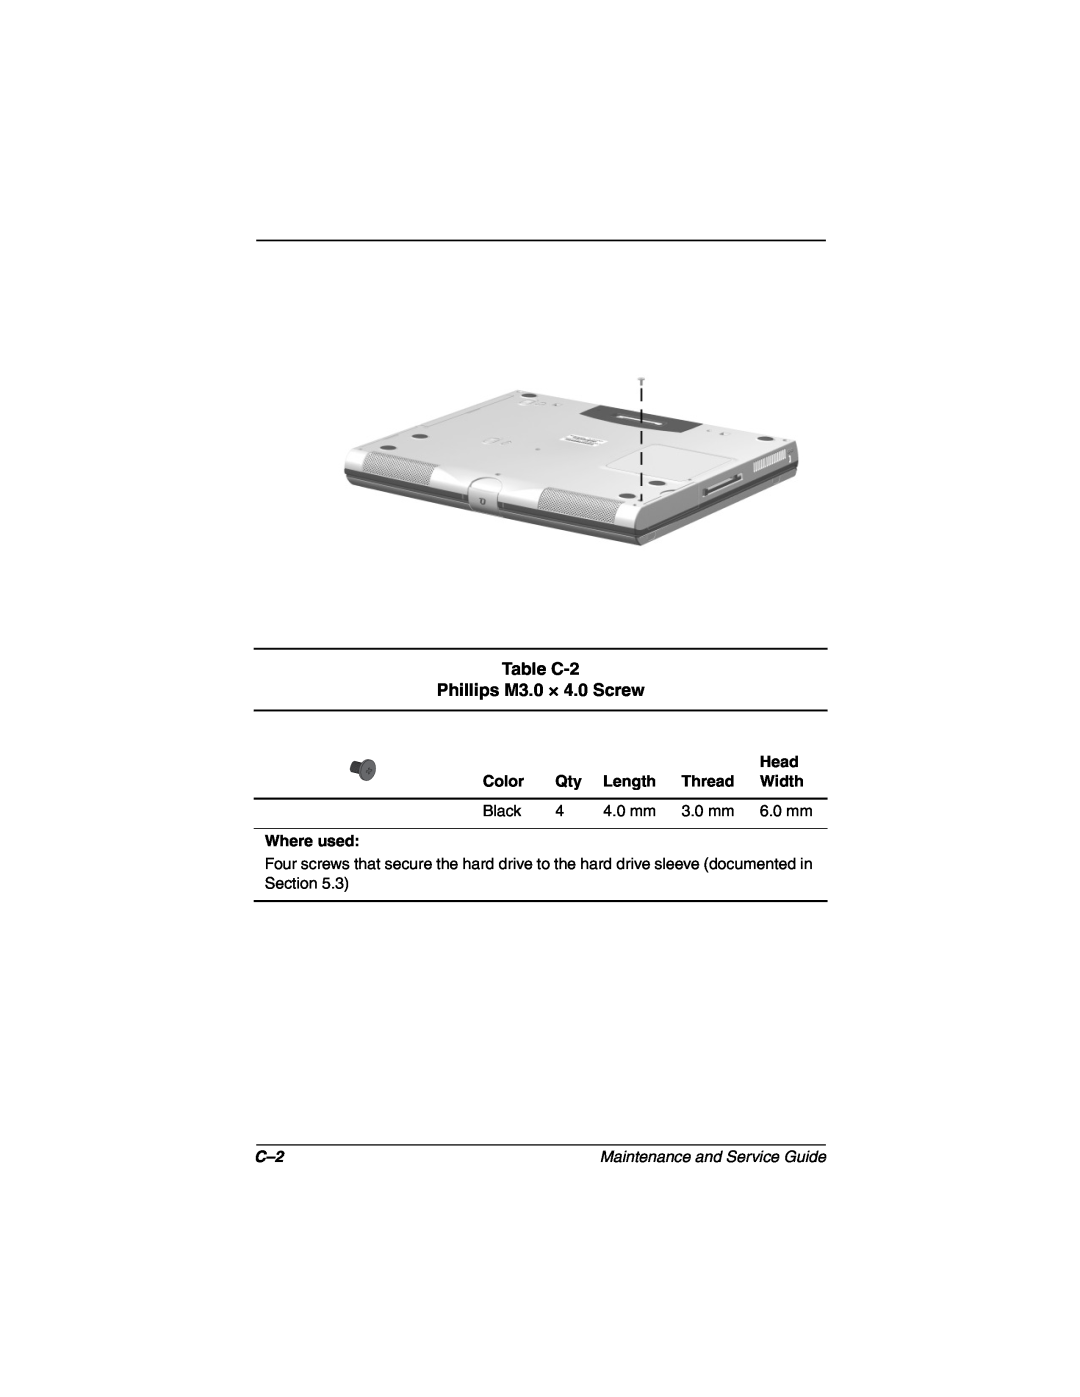 Compaq N160 manual Table C-2 Phillips M3.0 × 4.0 Screw 